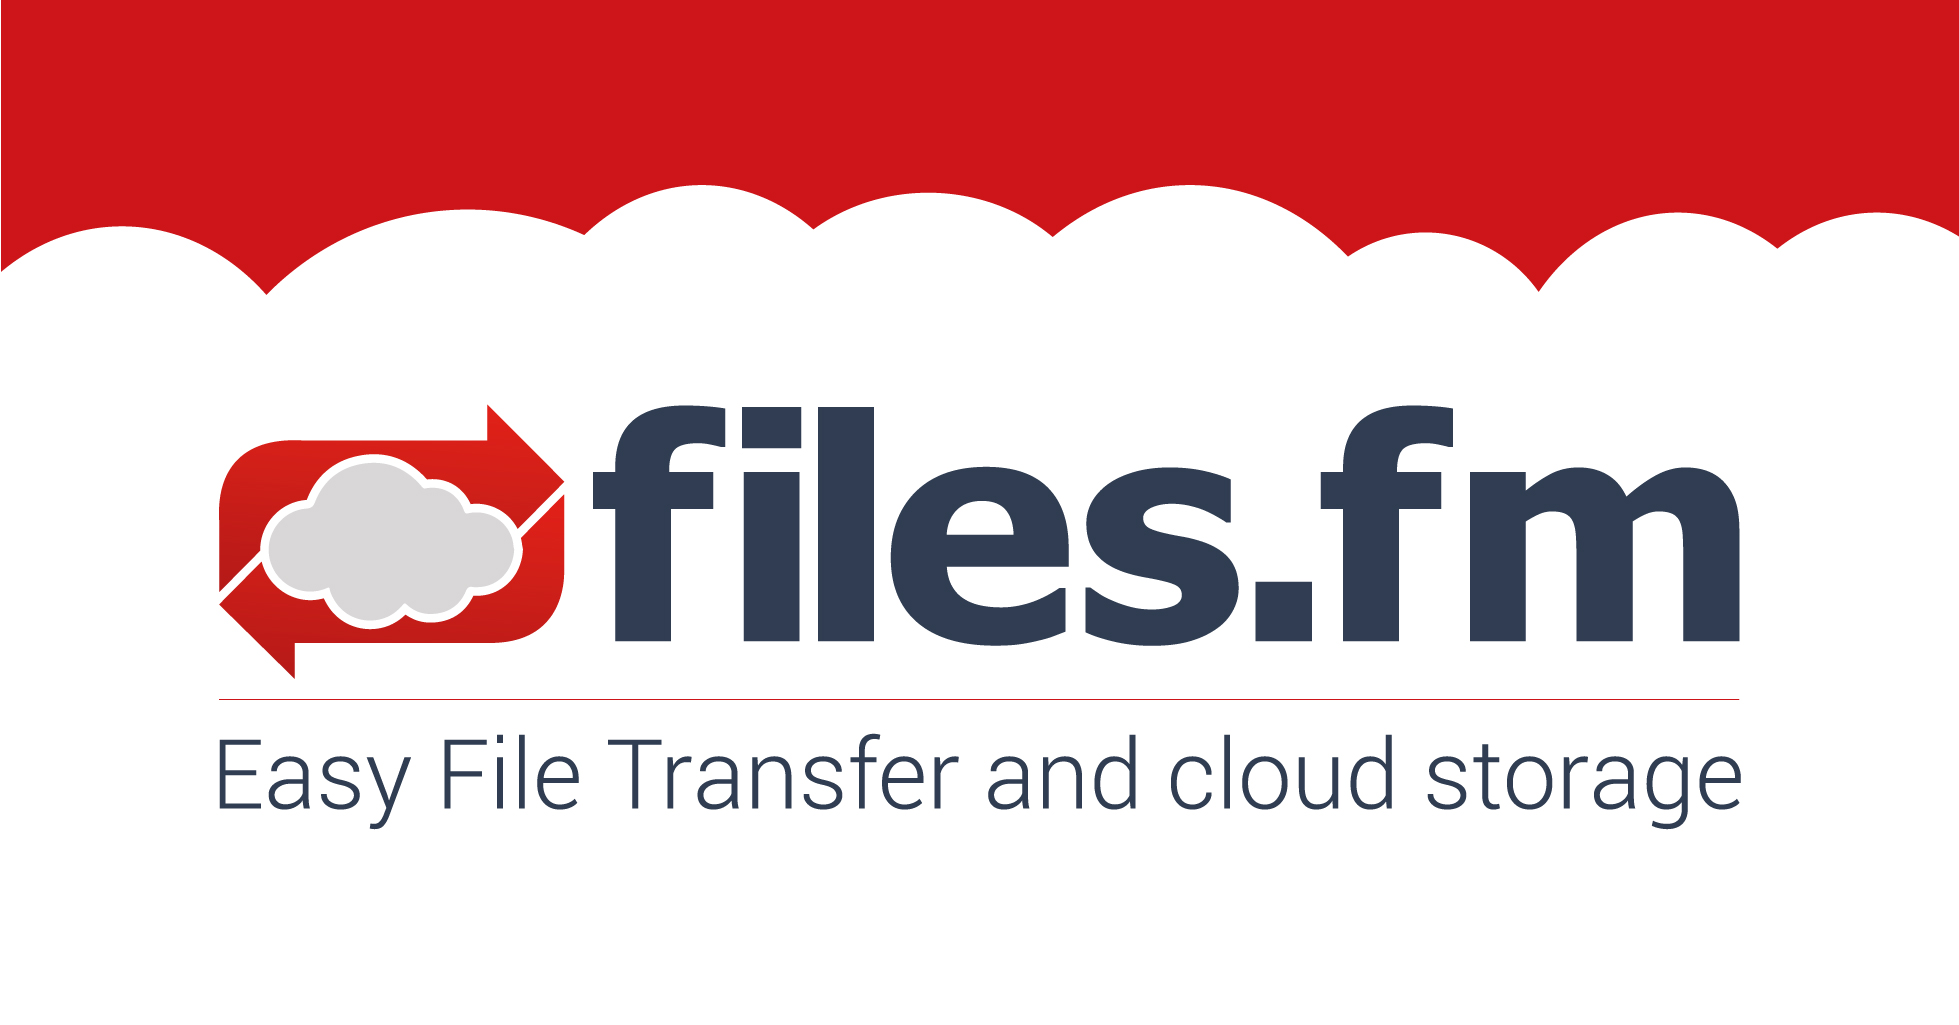 Https my files ru. Files. File Exchanger. Https: // ru. Files. Fm/u/k8twvw6vt.